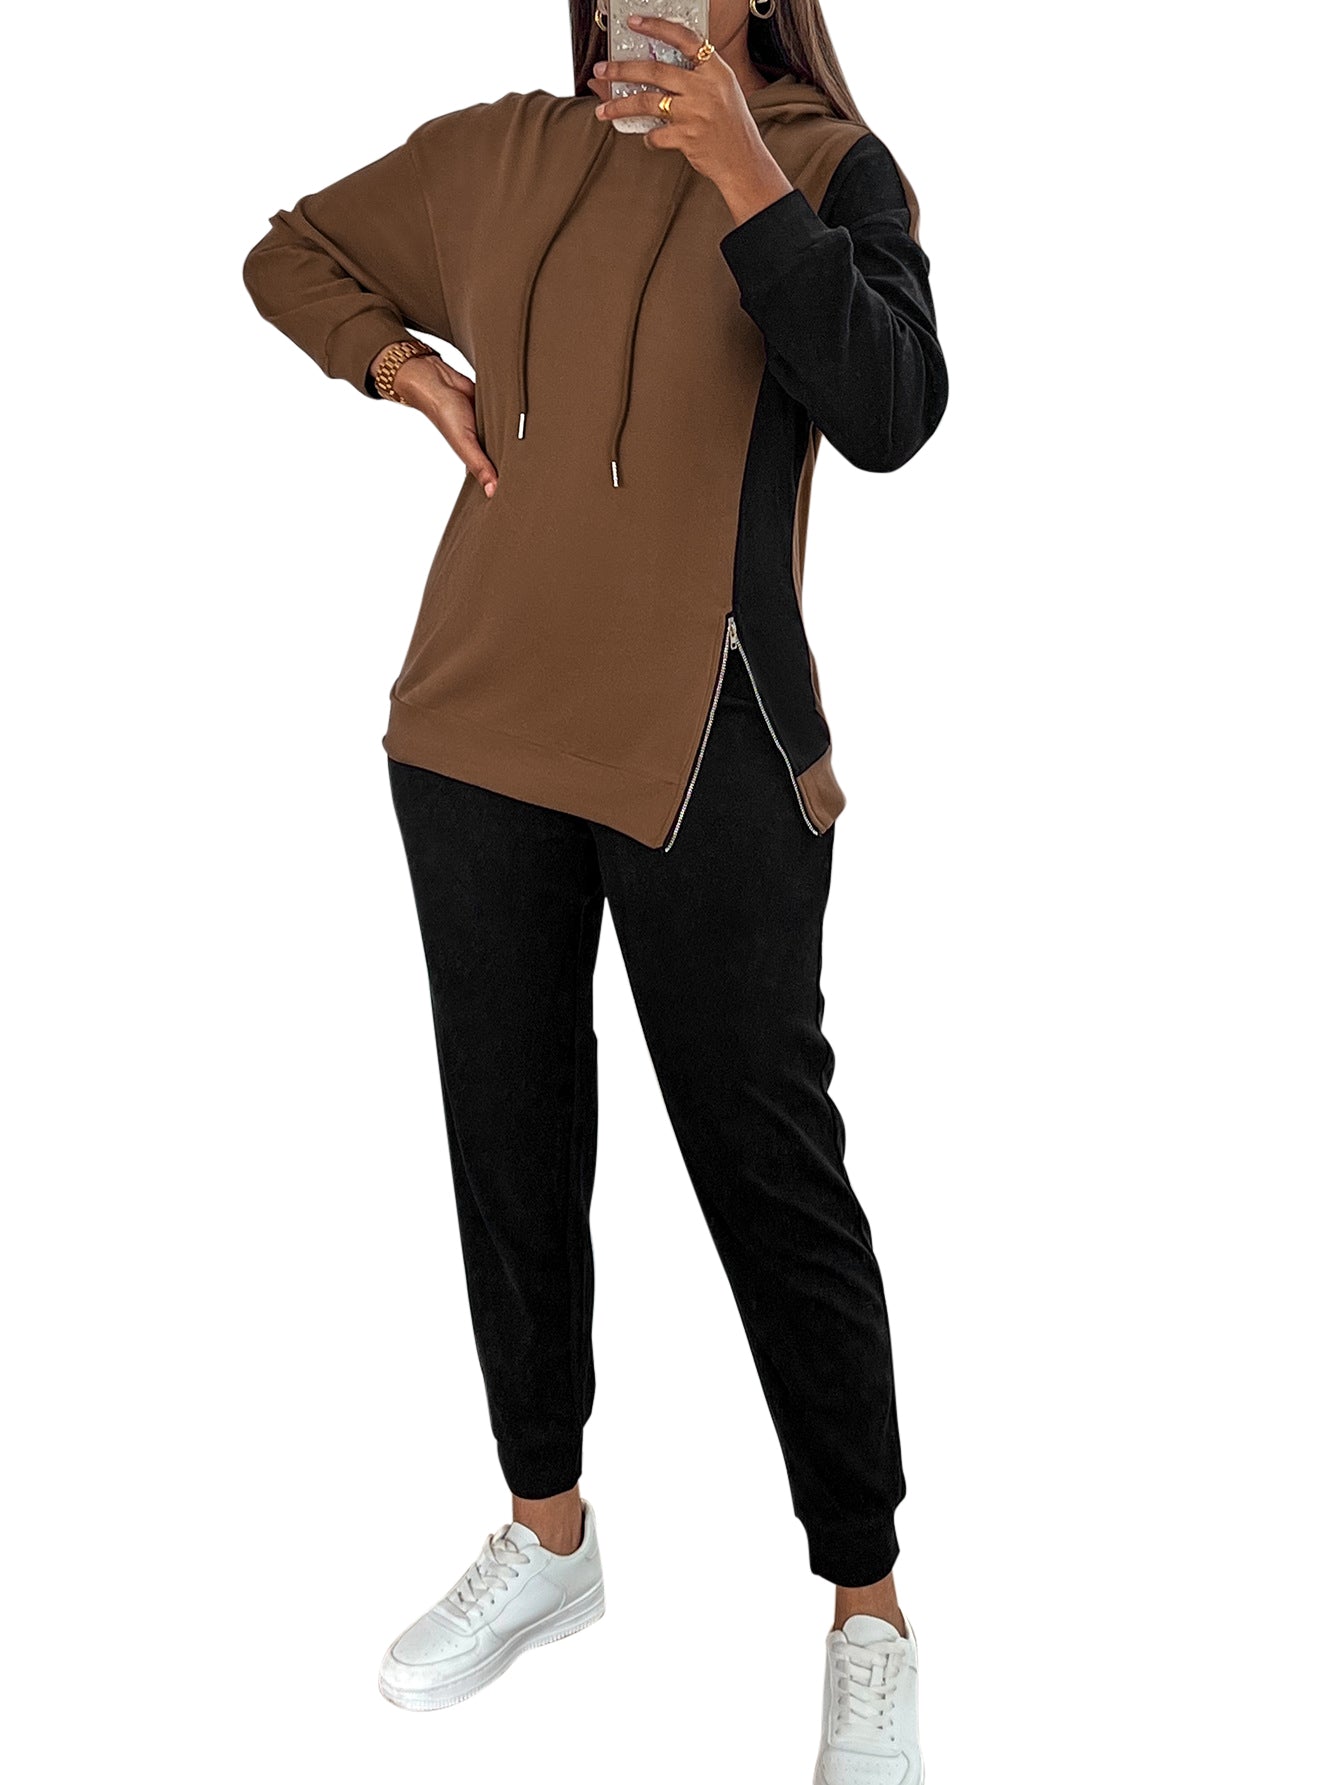 YESFASHION Women Zipper Colorblock Fashion Hooded Casual Suit